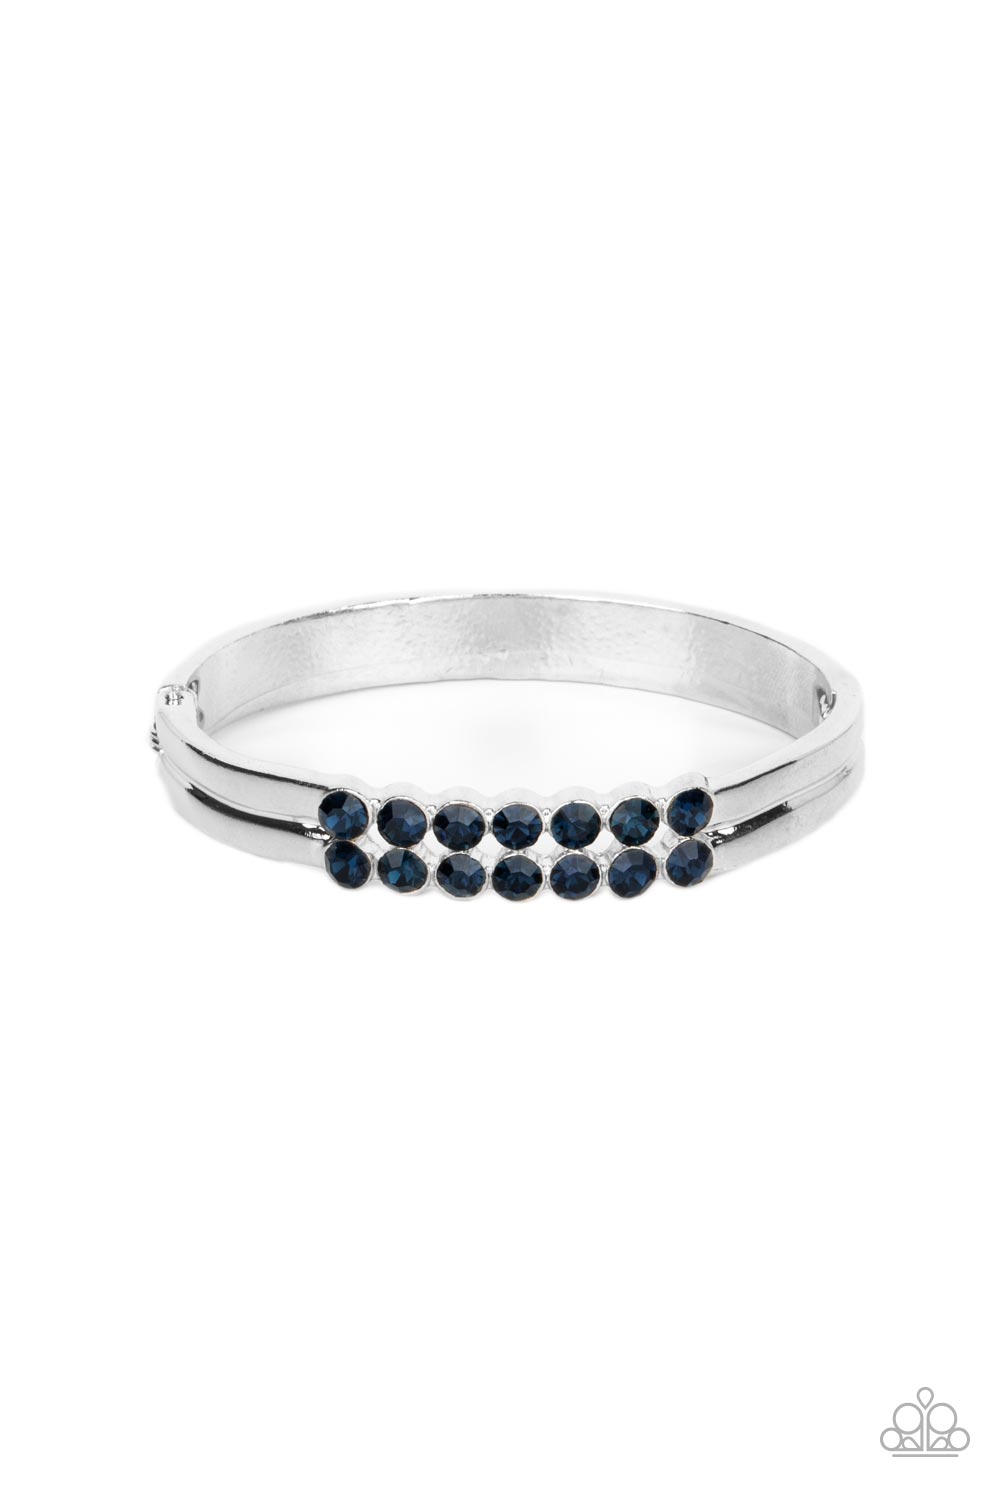 Doubled Down Dazzle Blue Rhinestone Bracelet - Paparazzi Accessories- lightbox - CarasShop.com - $5 Jewelry by Cara Jewels